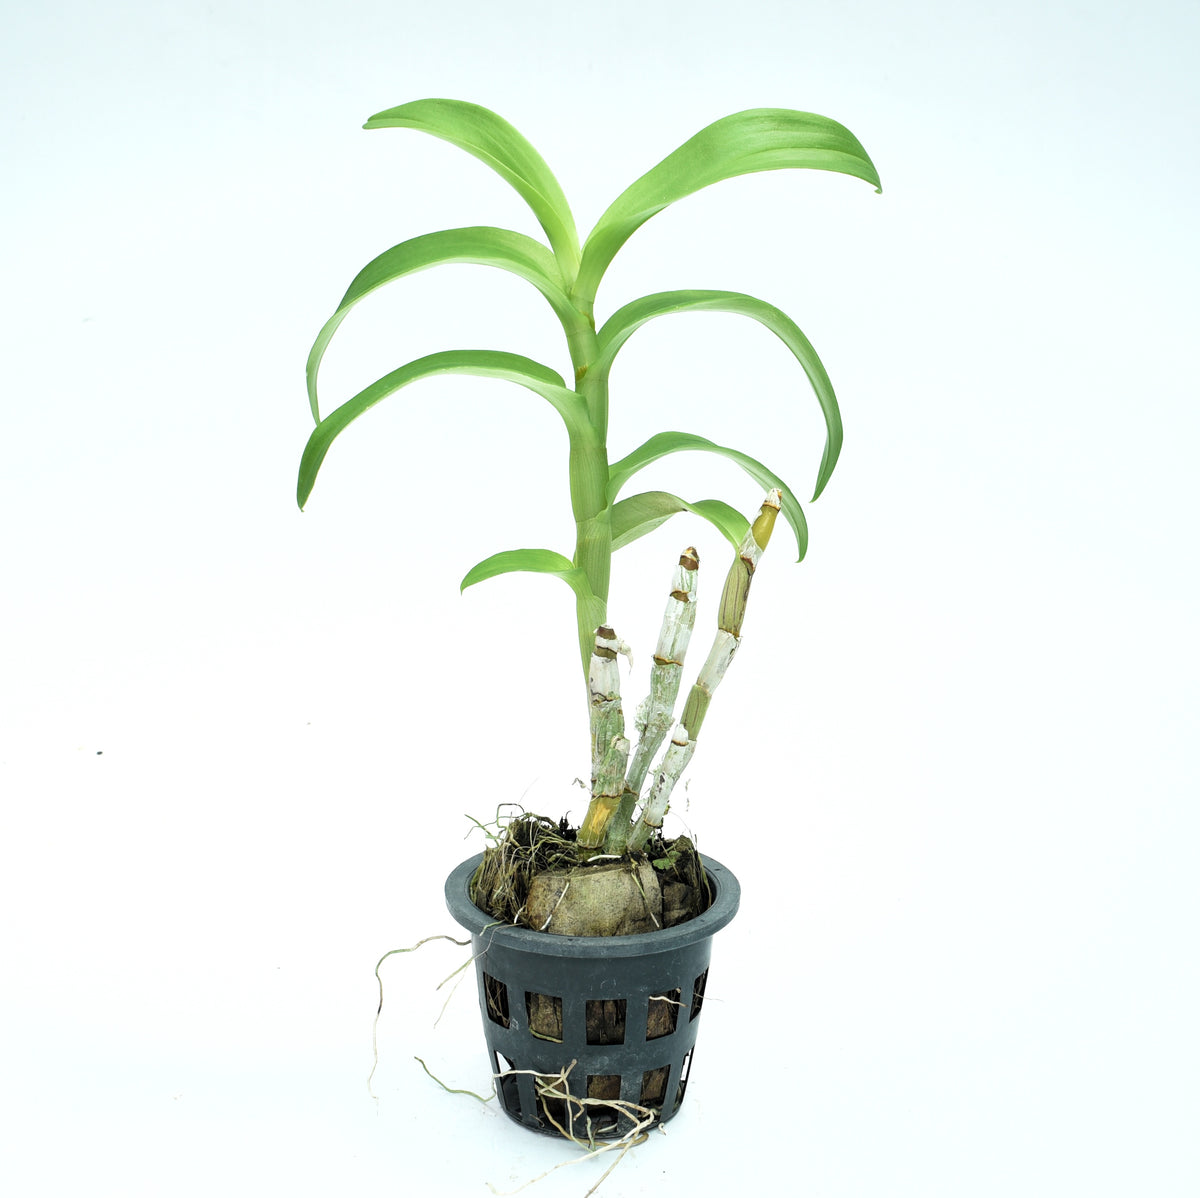 Dendrobium Alien (Den-Cat)